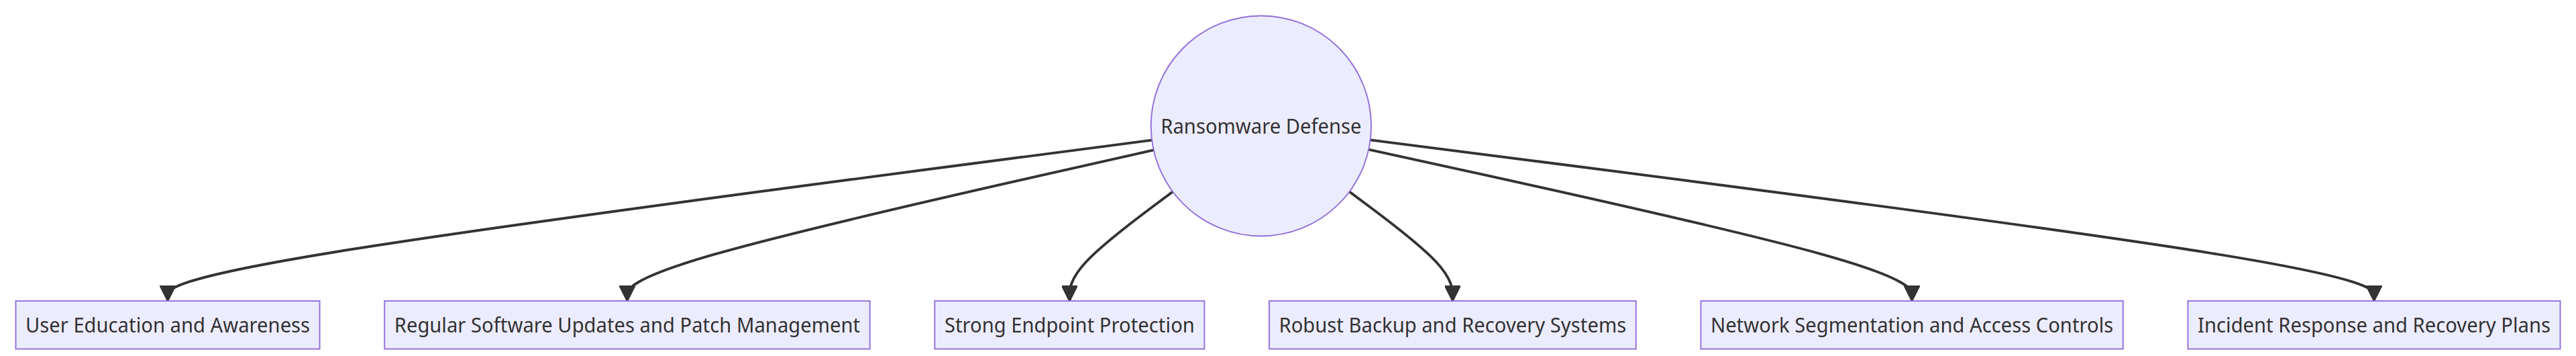 Ransomware defense